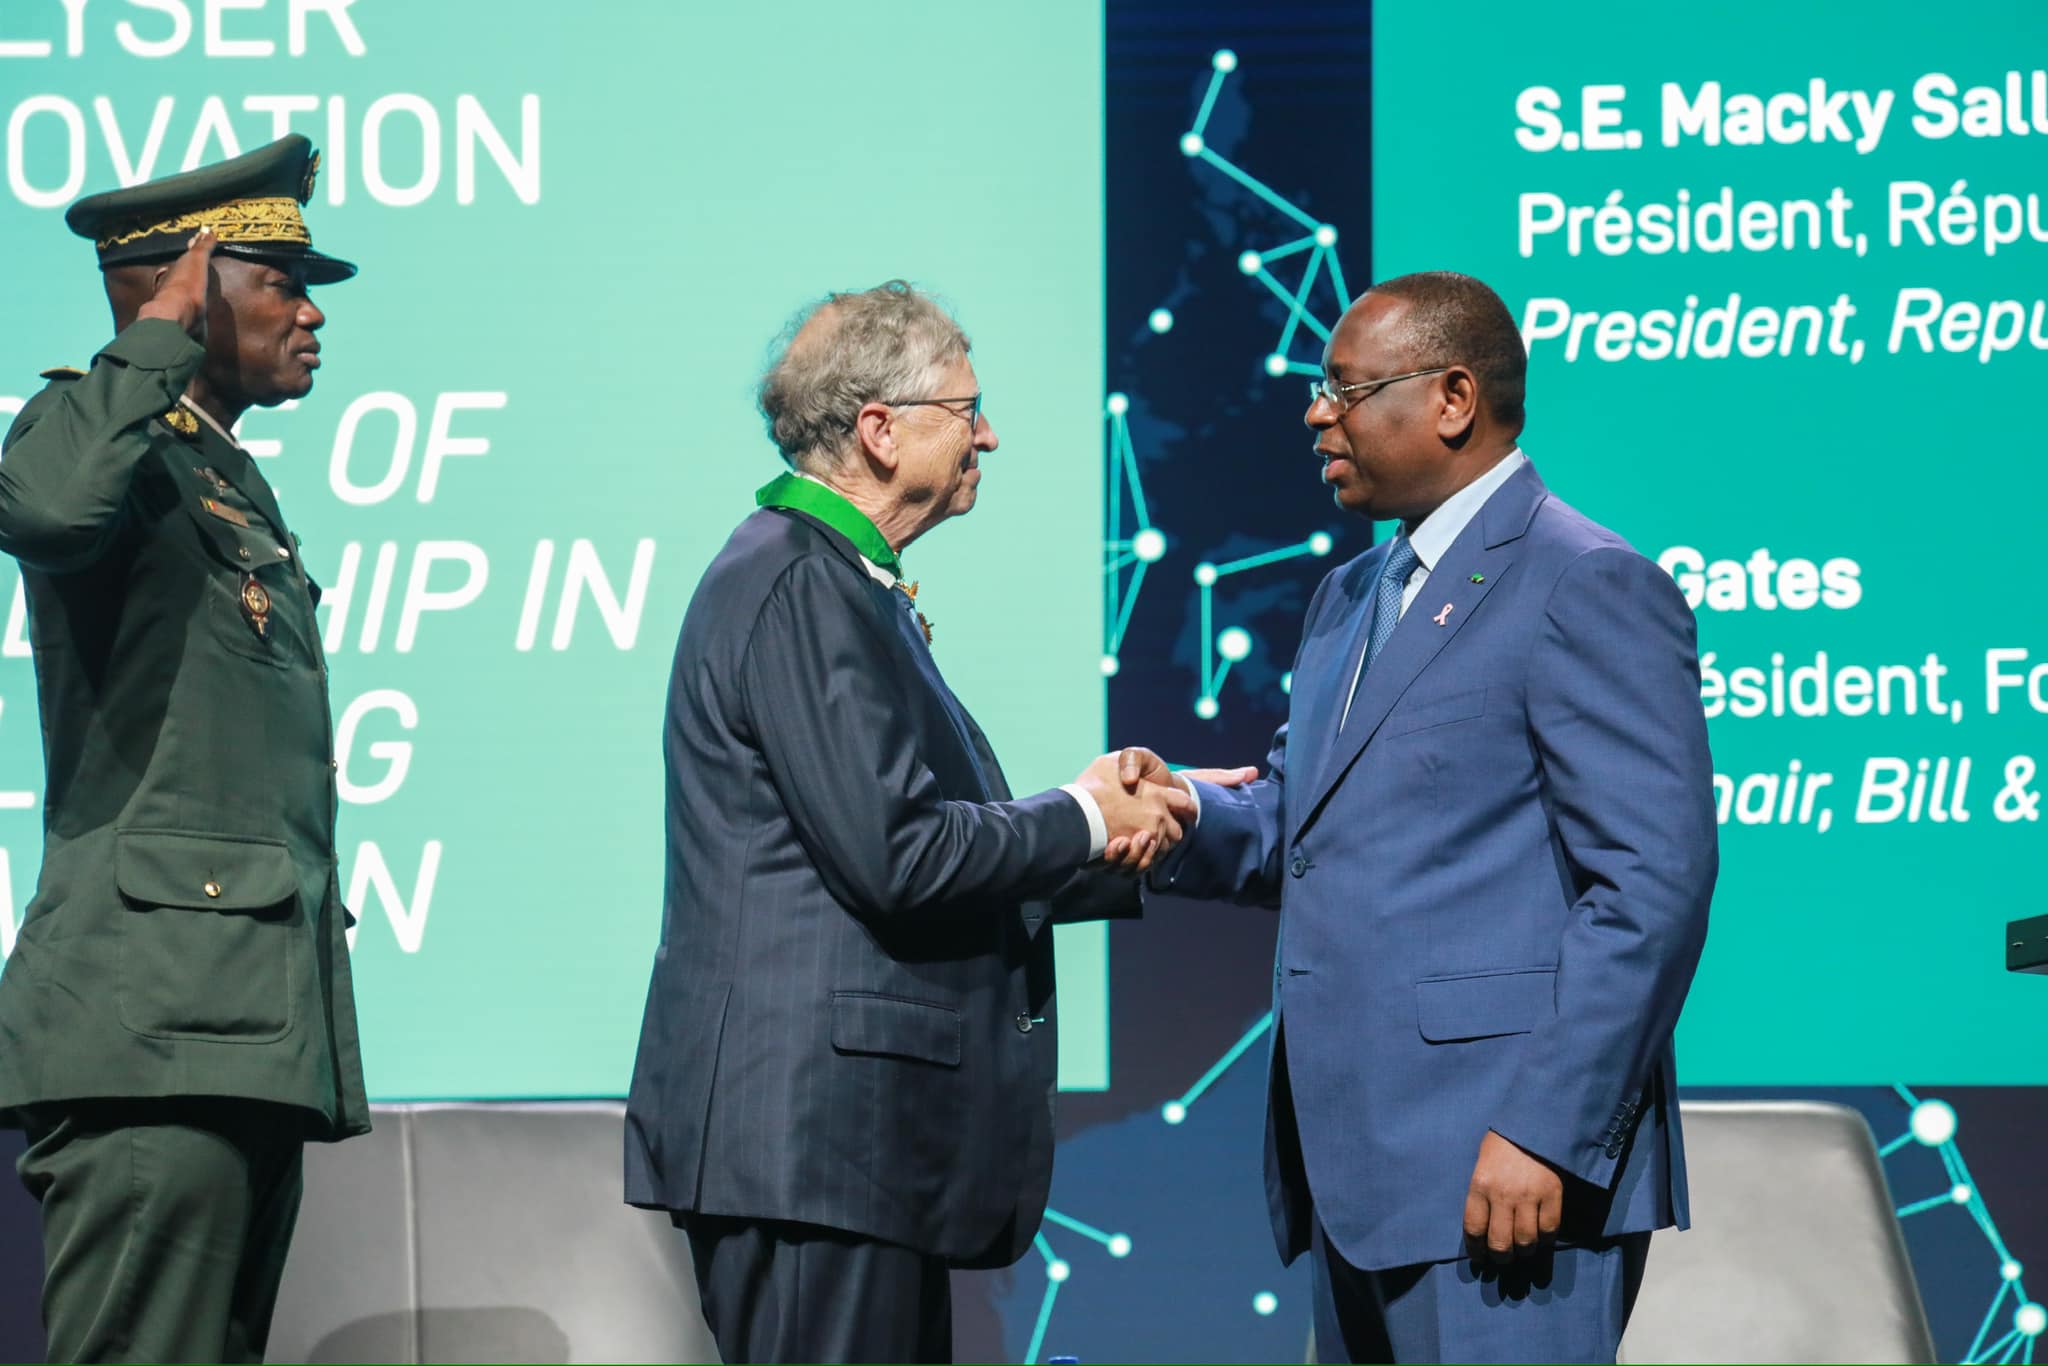 Macky Sall et Bill Gates - scientifique et philanthrope américain